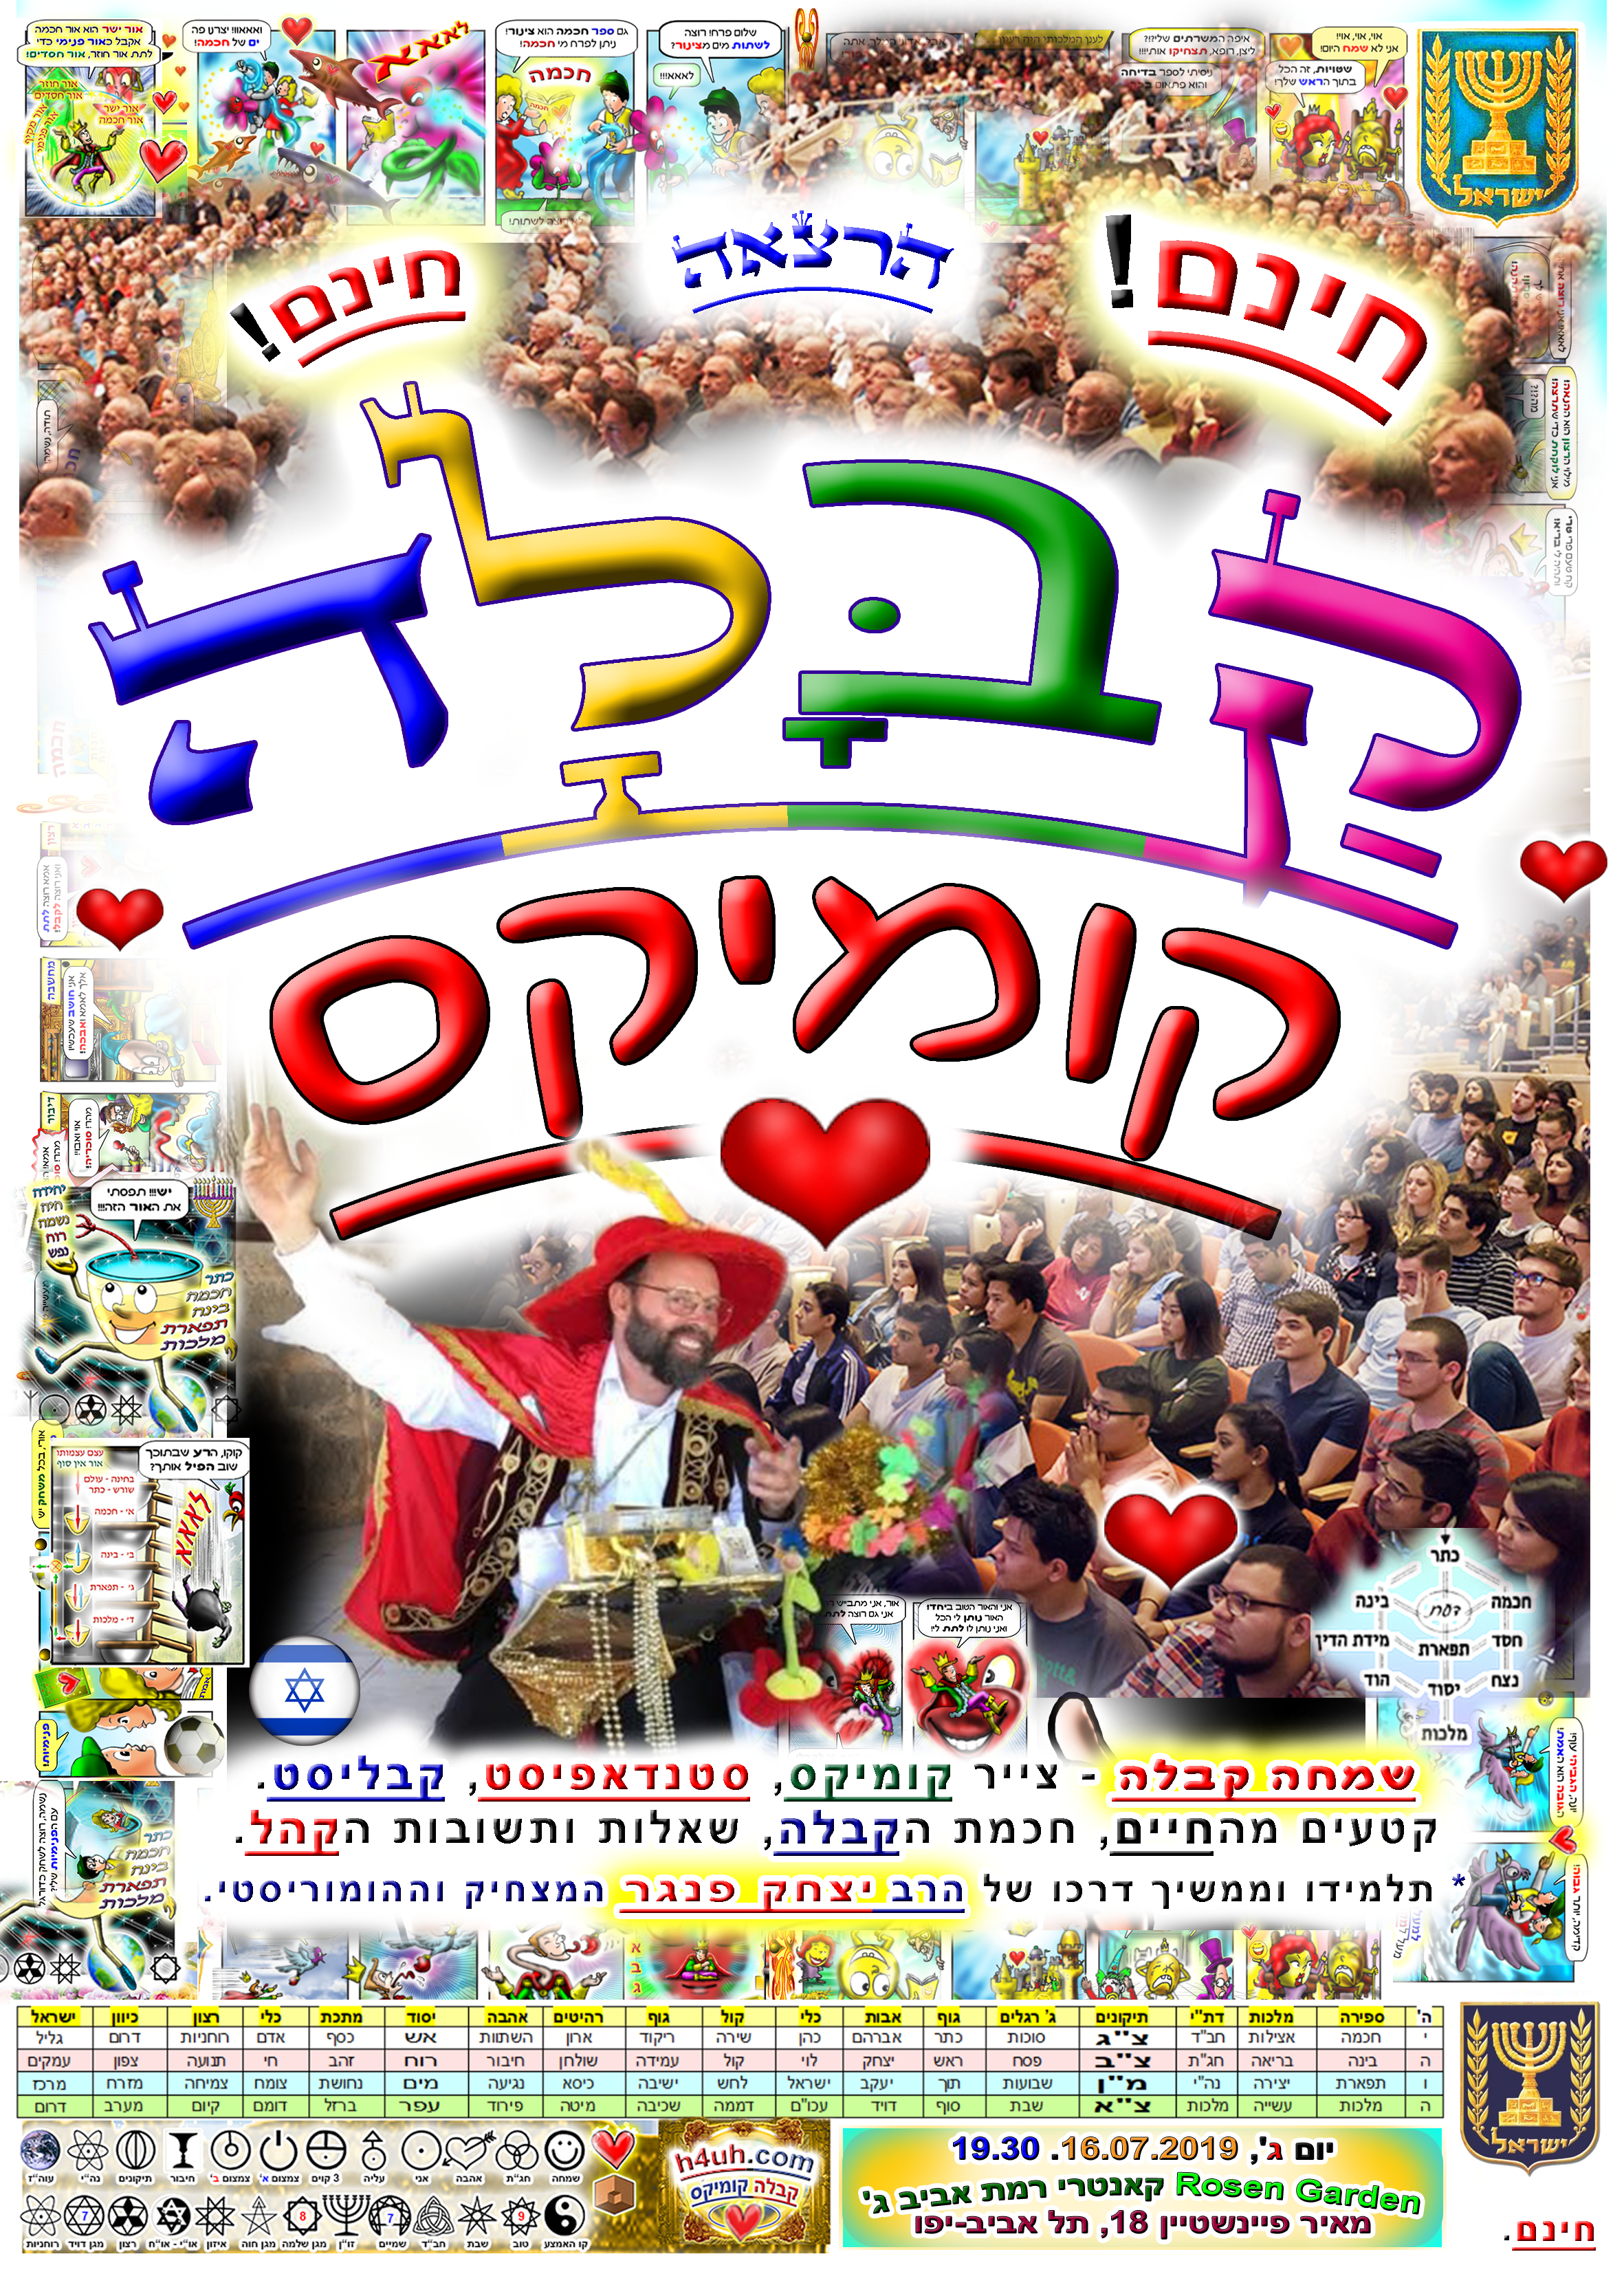 A3_30x42cm_דף-לפירסום-הרצאה-קבלה-קומיקס-1-Lecture-Bible-Kabbalah-Posters-Comic-Art-Paintings-Torah-Spiritual-Love-Food-Light-Work-Happy-World-Health-God-Gift-Magic-Universal-2019